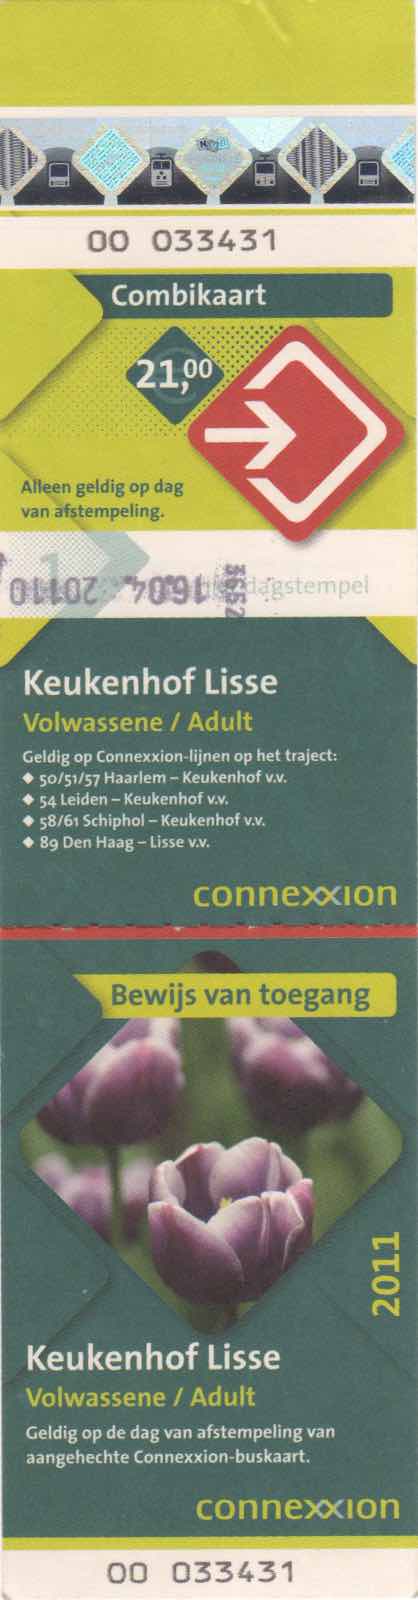 ticket for Connexxion bus and entrance to Keukenhof (2011)